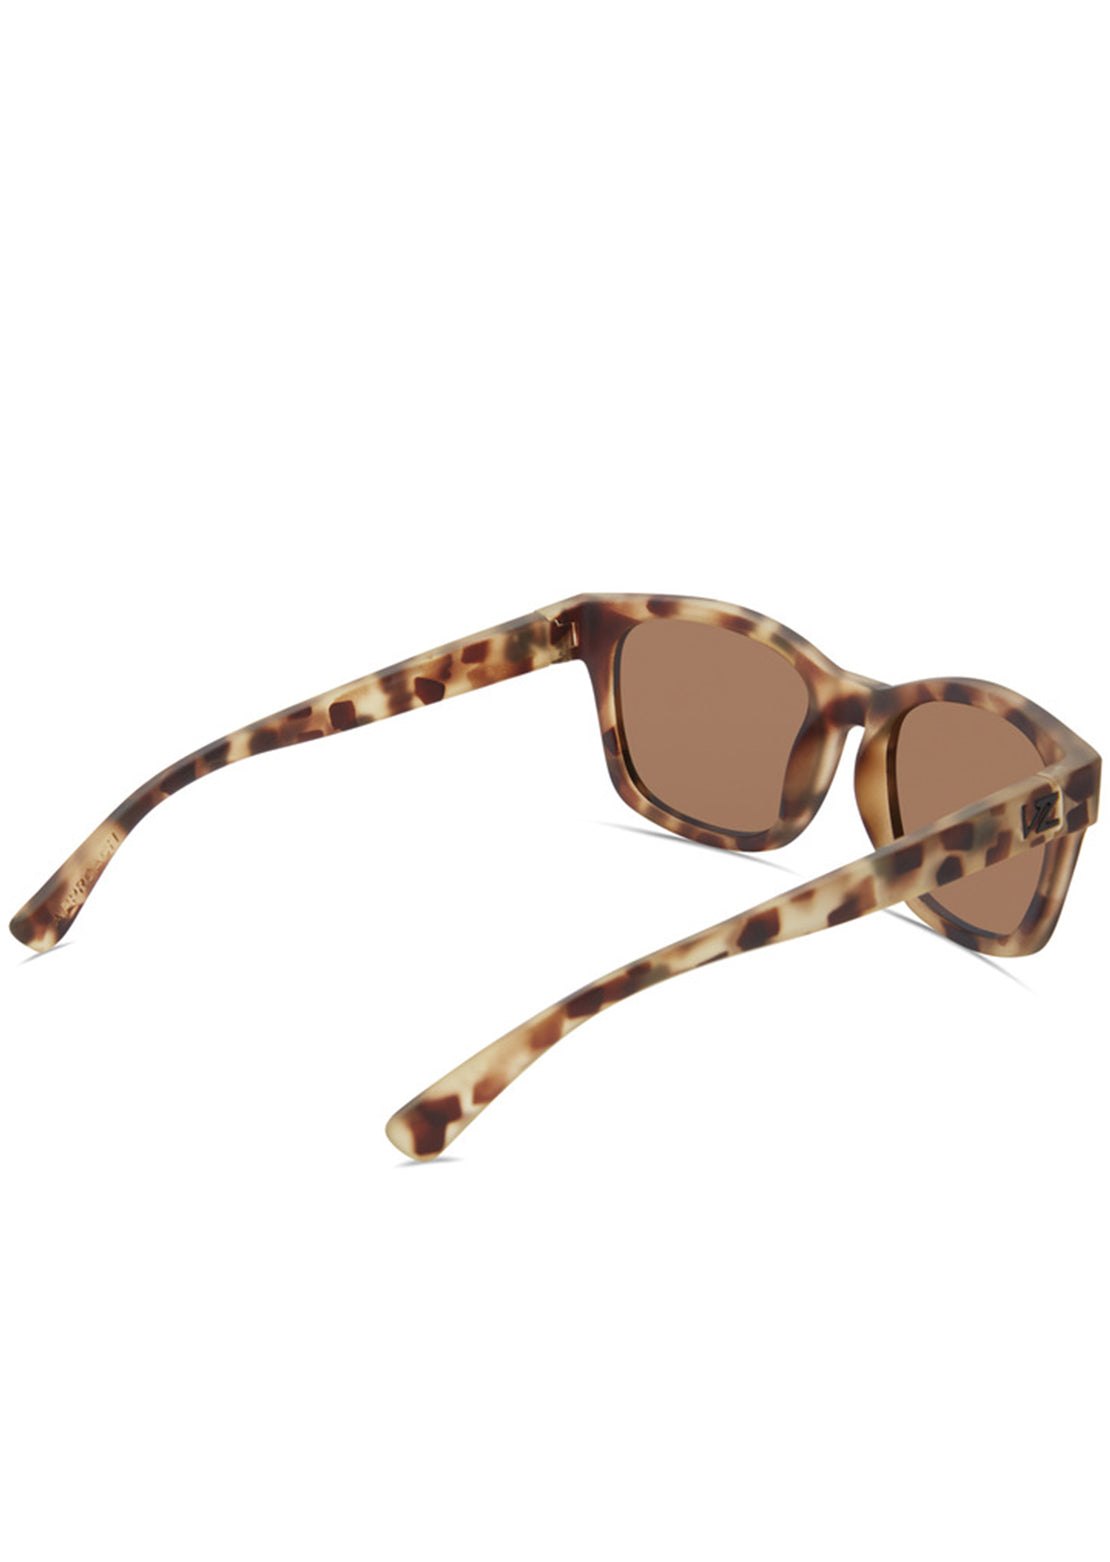 Von Zipper Approach Sunglasses Dusty Tortoise Satin/Bronze